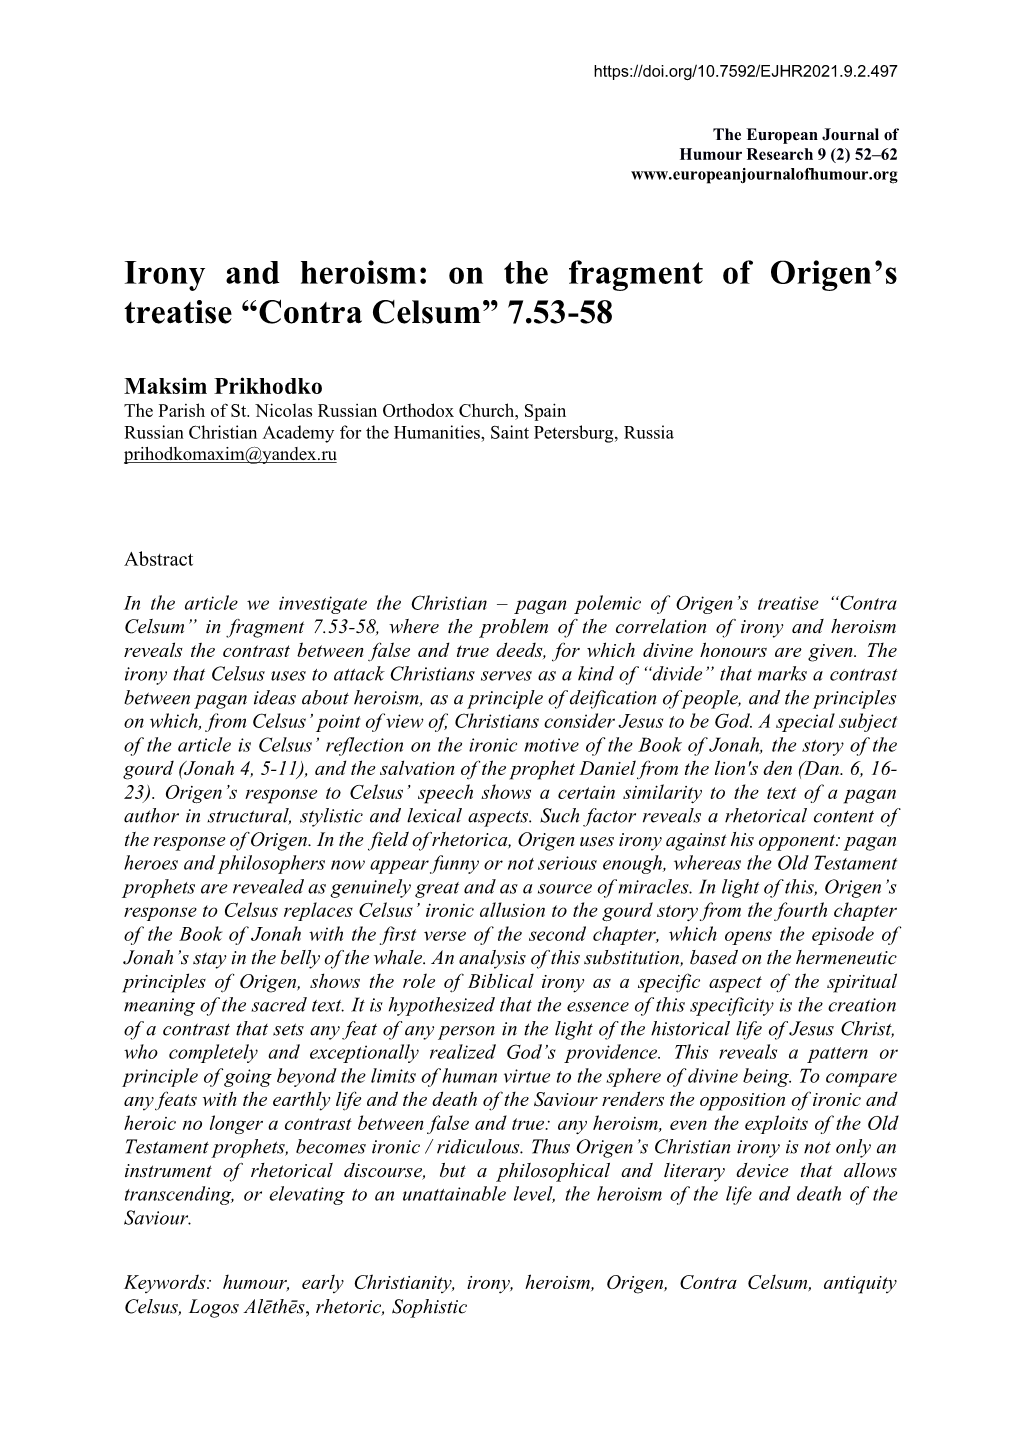 On the Fragment of Origen's Treatise “Contra Celsum” 7.53-58